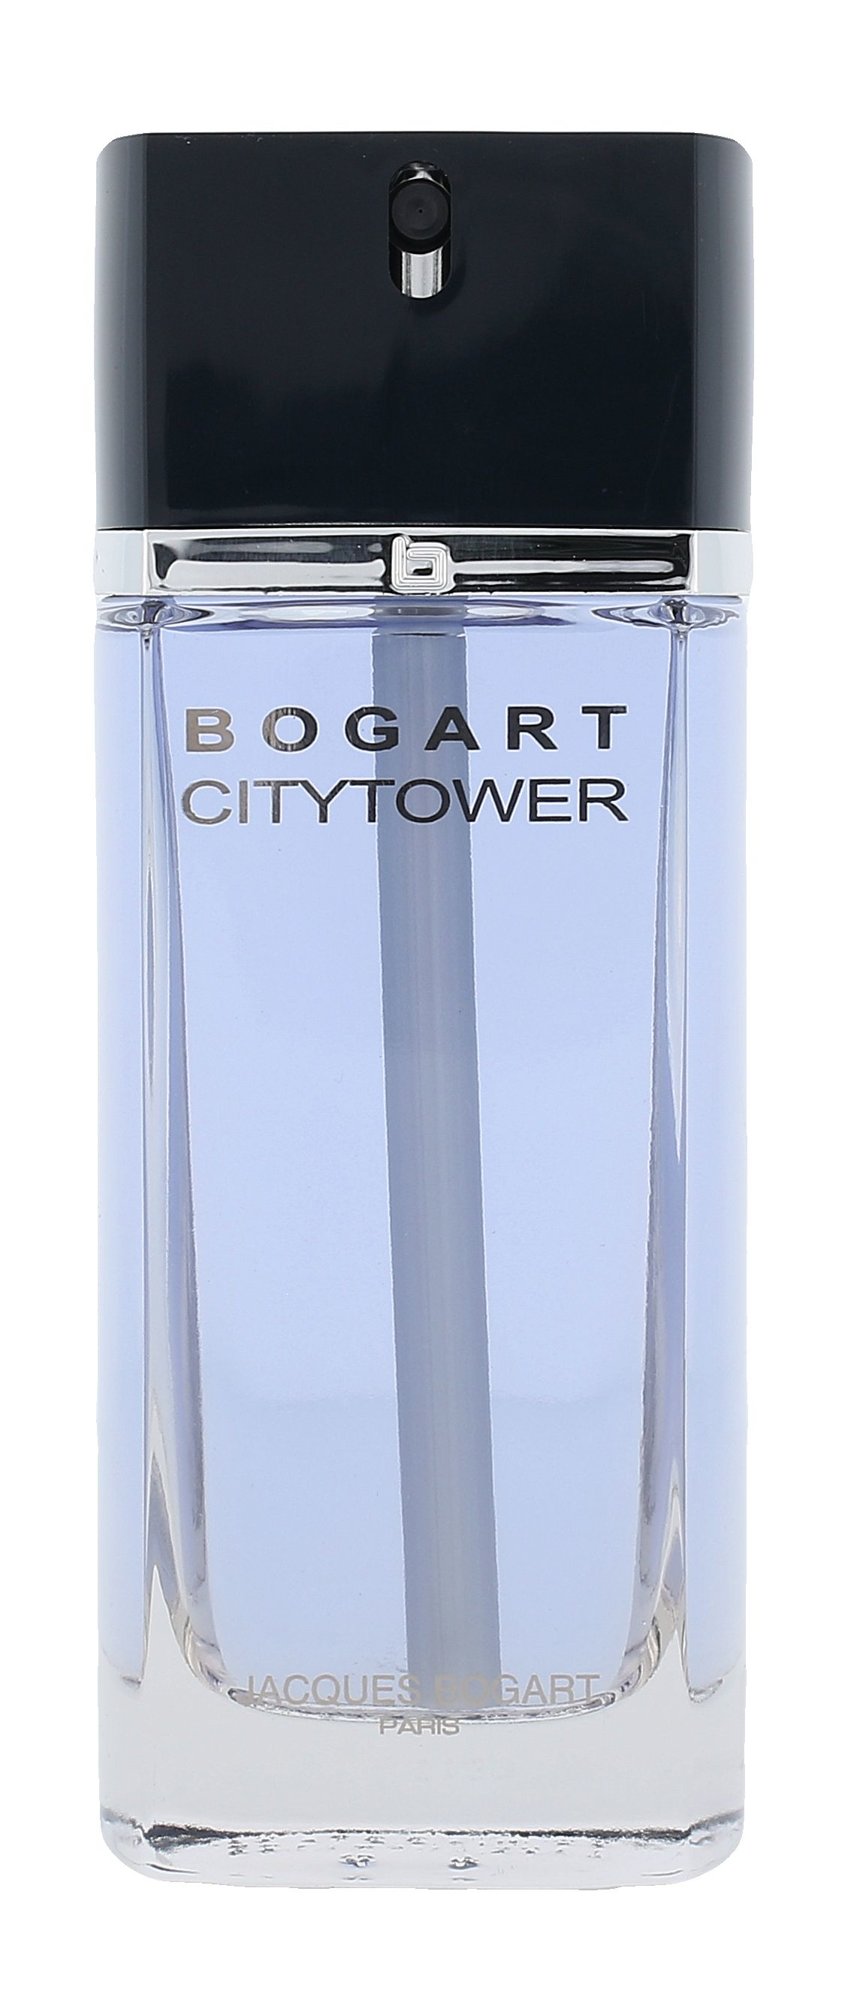 Jacques Bogart Bogart CityTower 100ml vanduo po skutimosi (Pažeista pakuotė)